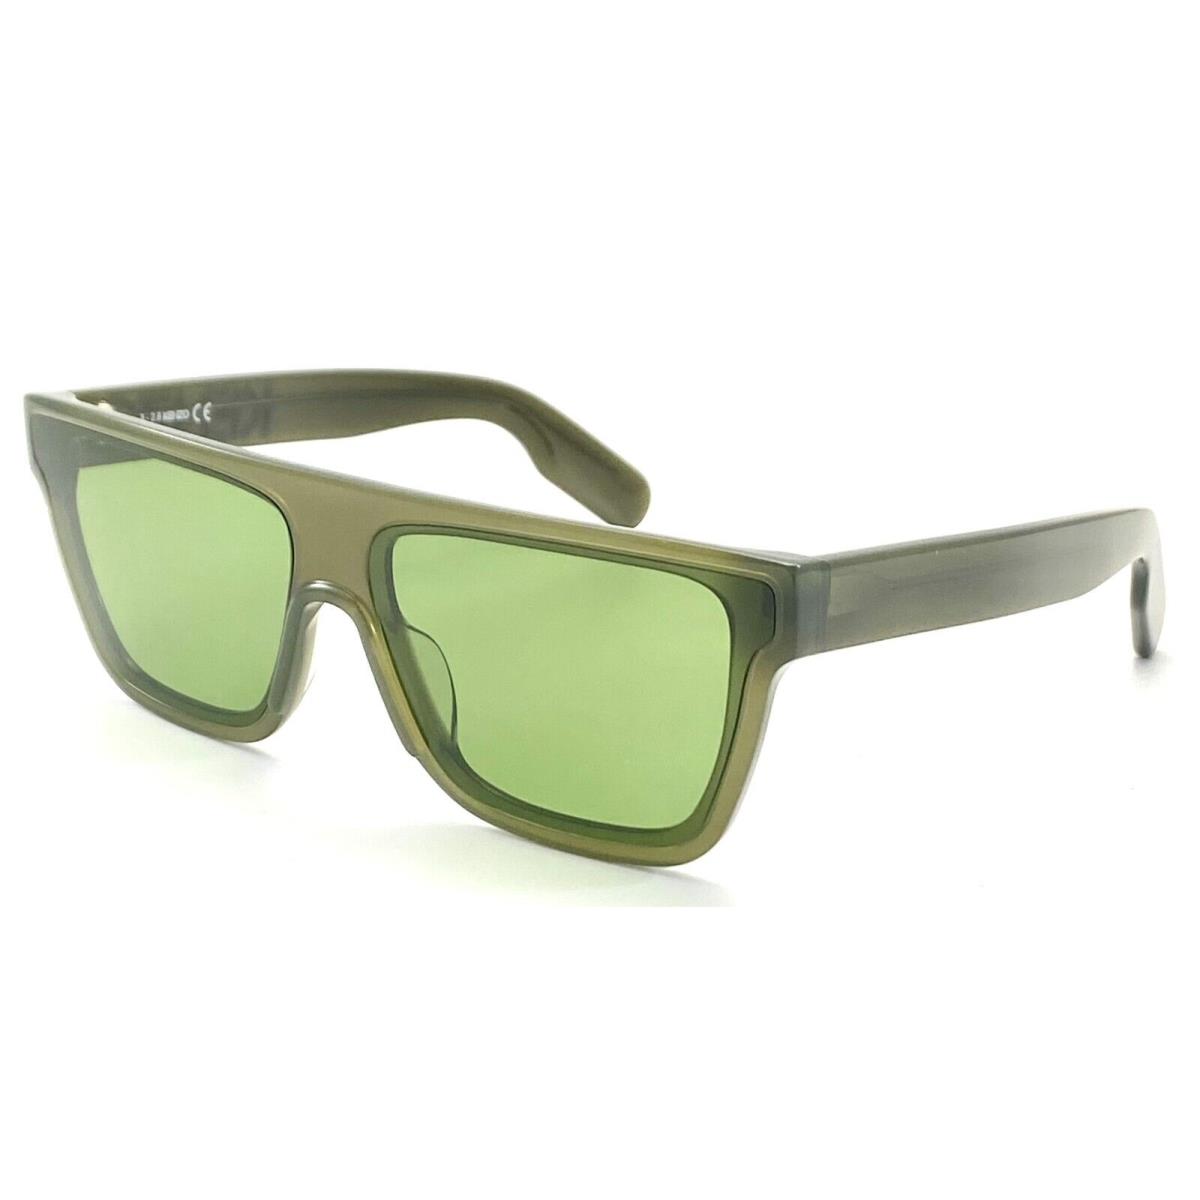 Kenzo Paris KZ40009I 96N Green Sunglasses 65-13 145 W/case - Green Frame, Green Lens